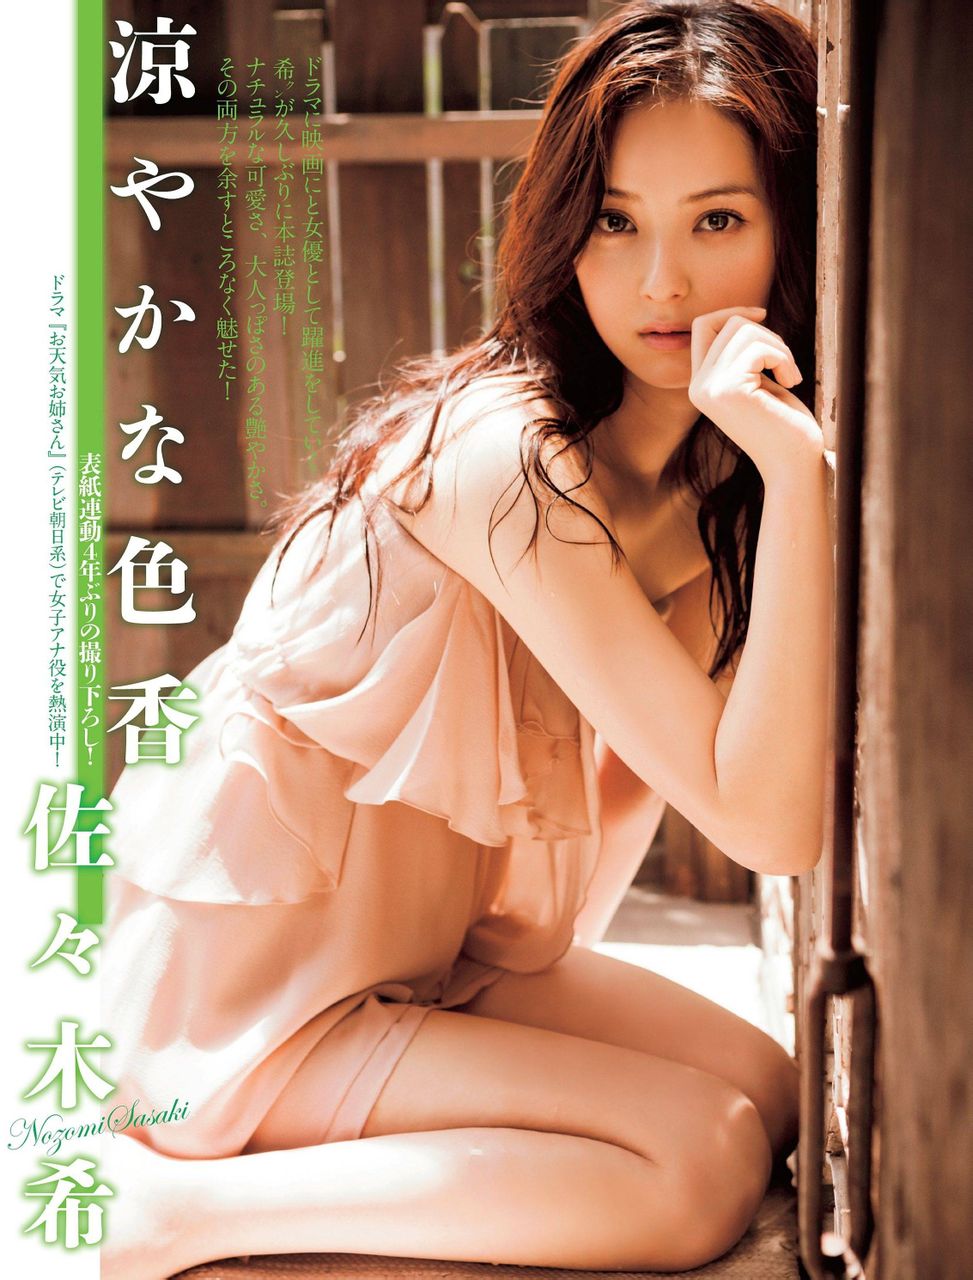 Nozomi Sasaki Porn - Nao Kanzaki and a few friends: Nozomi Sasaki: 2013 magazine scans #2 and  her wedding dress collection